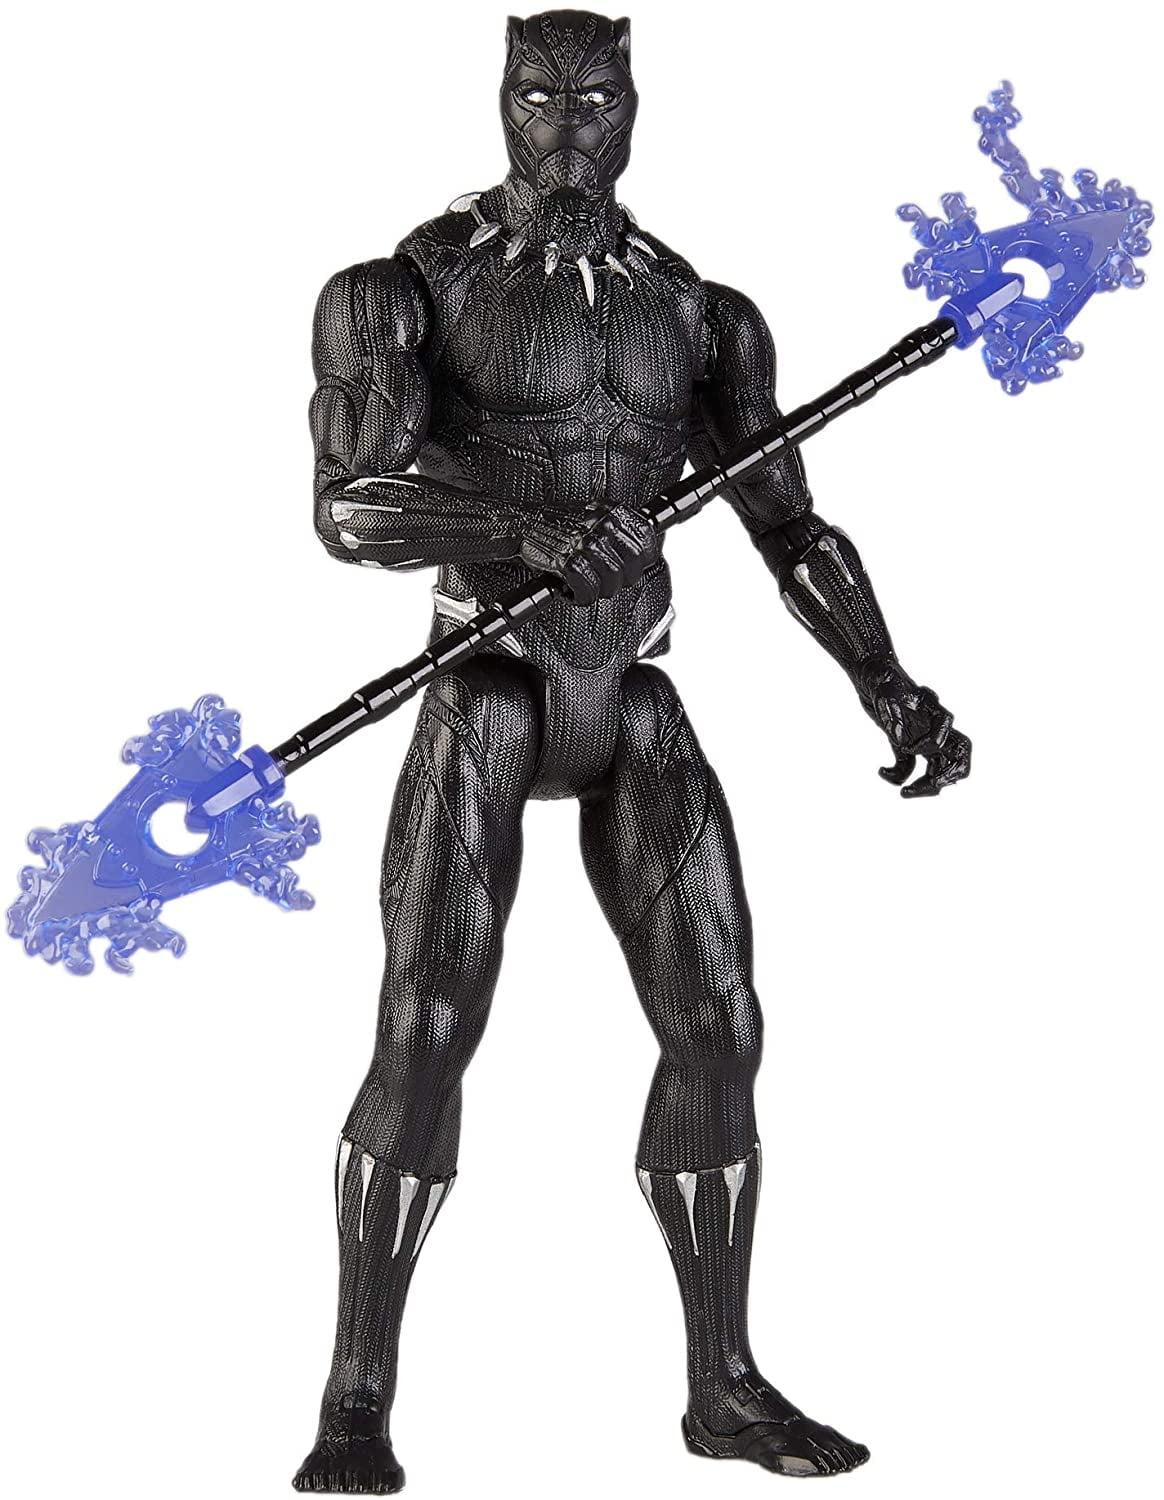 black superhero action figures